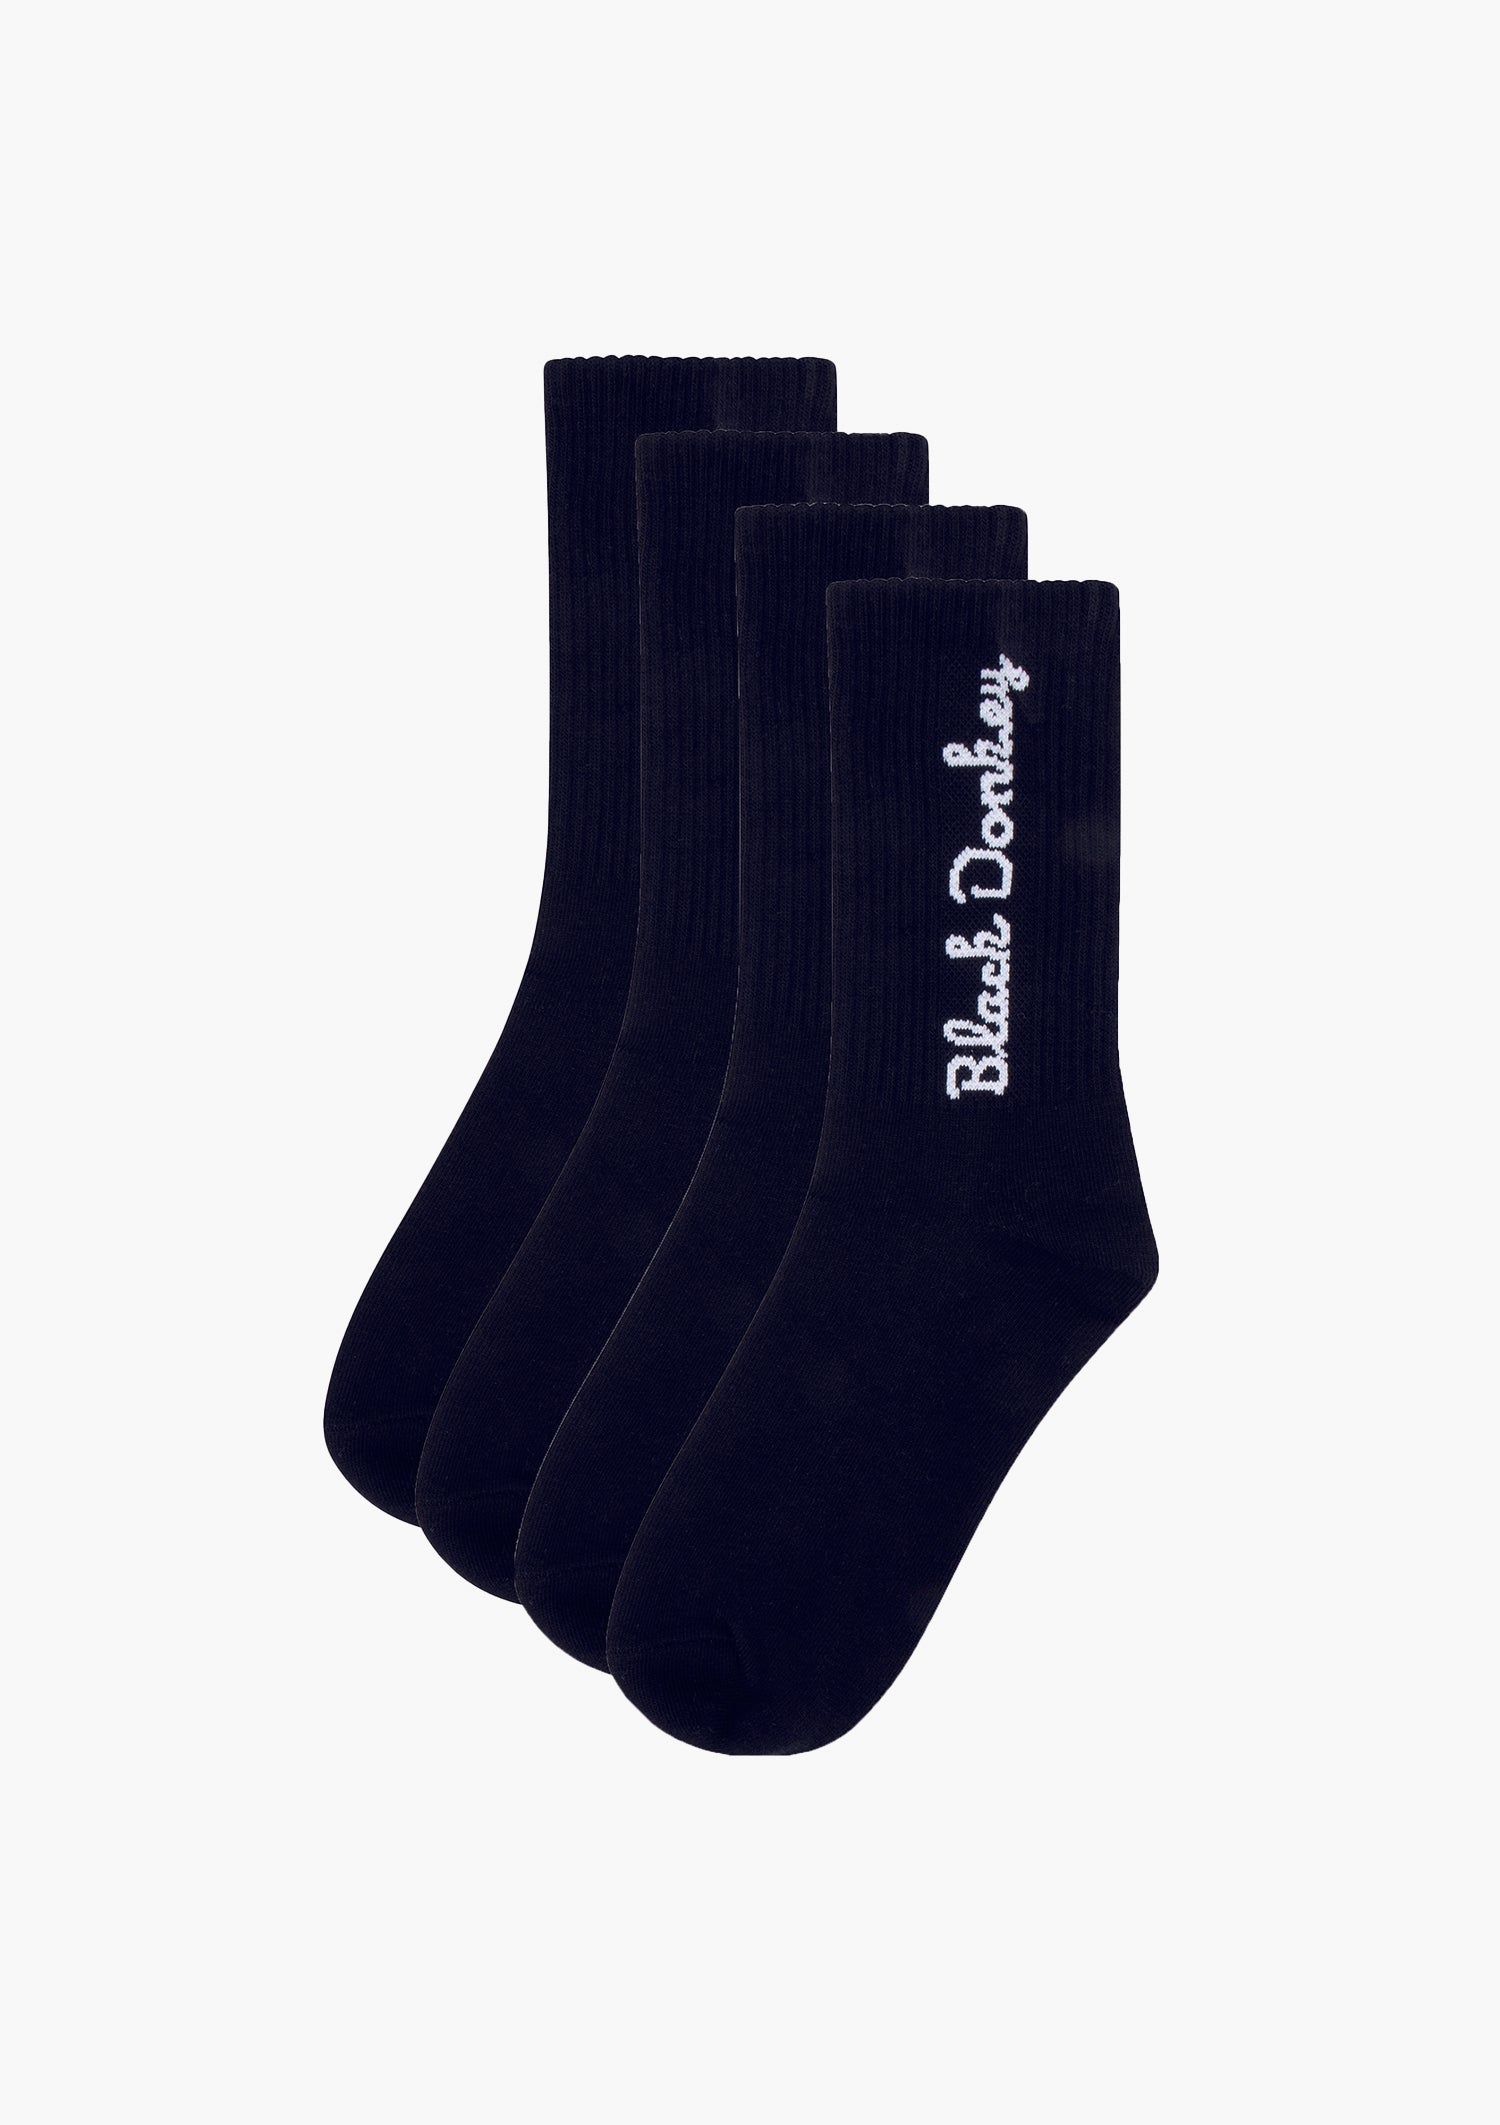 Black Donkey Socks 2-Pack I Black/White